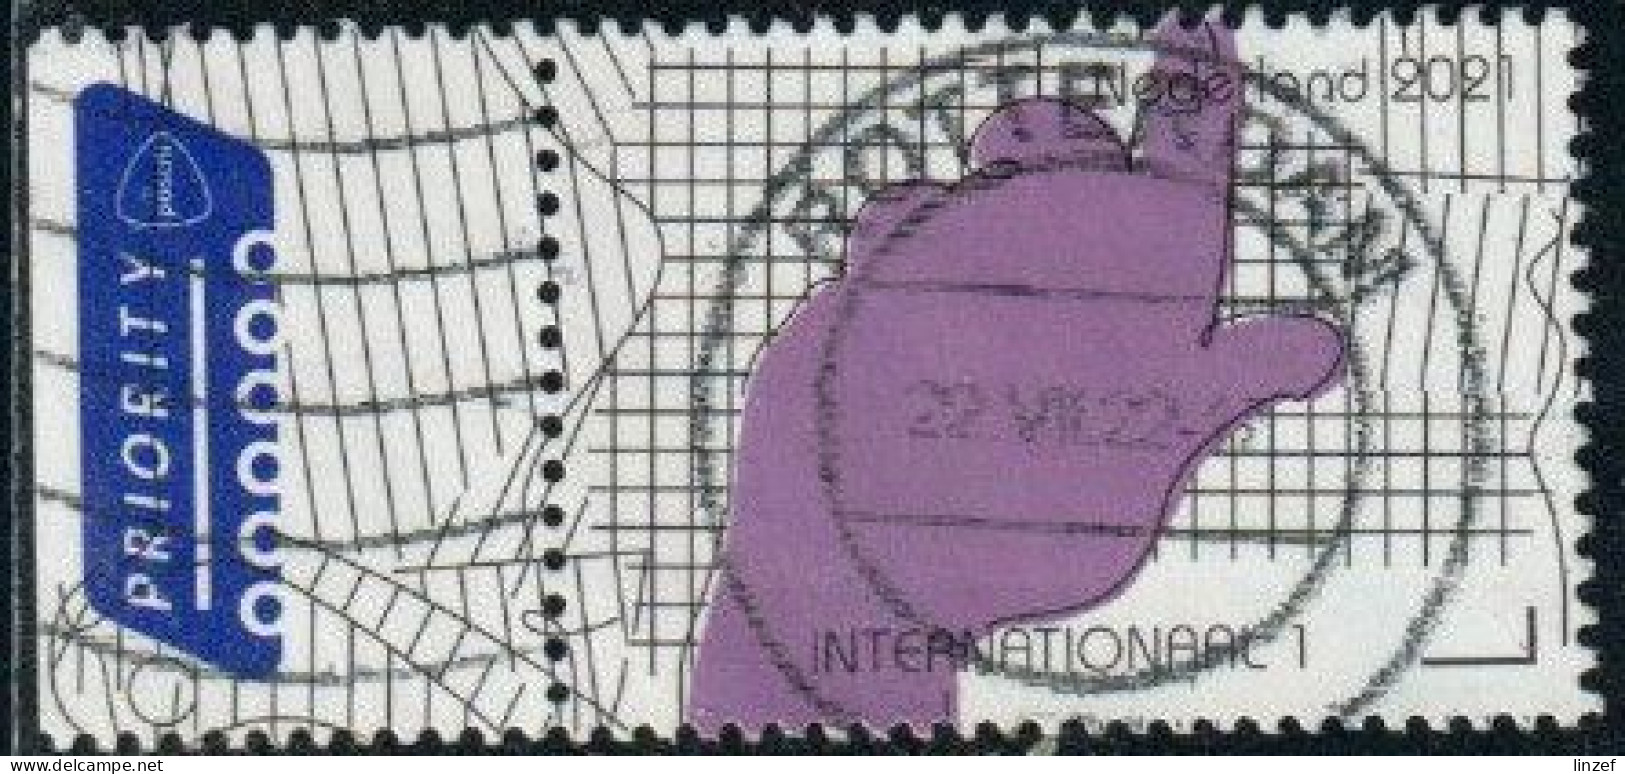 Pays-Bas 2021 Yv. N°3995 - Design Néerlandais - Oblitéré - Used Stamps